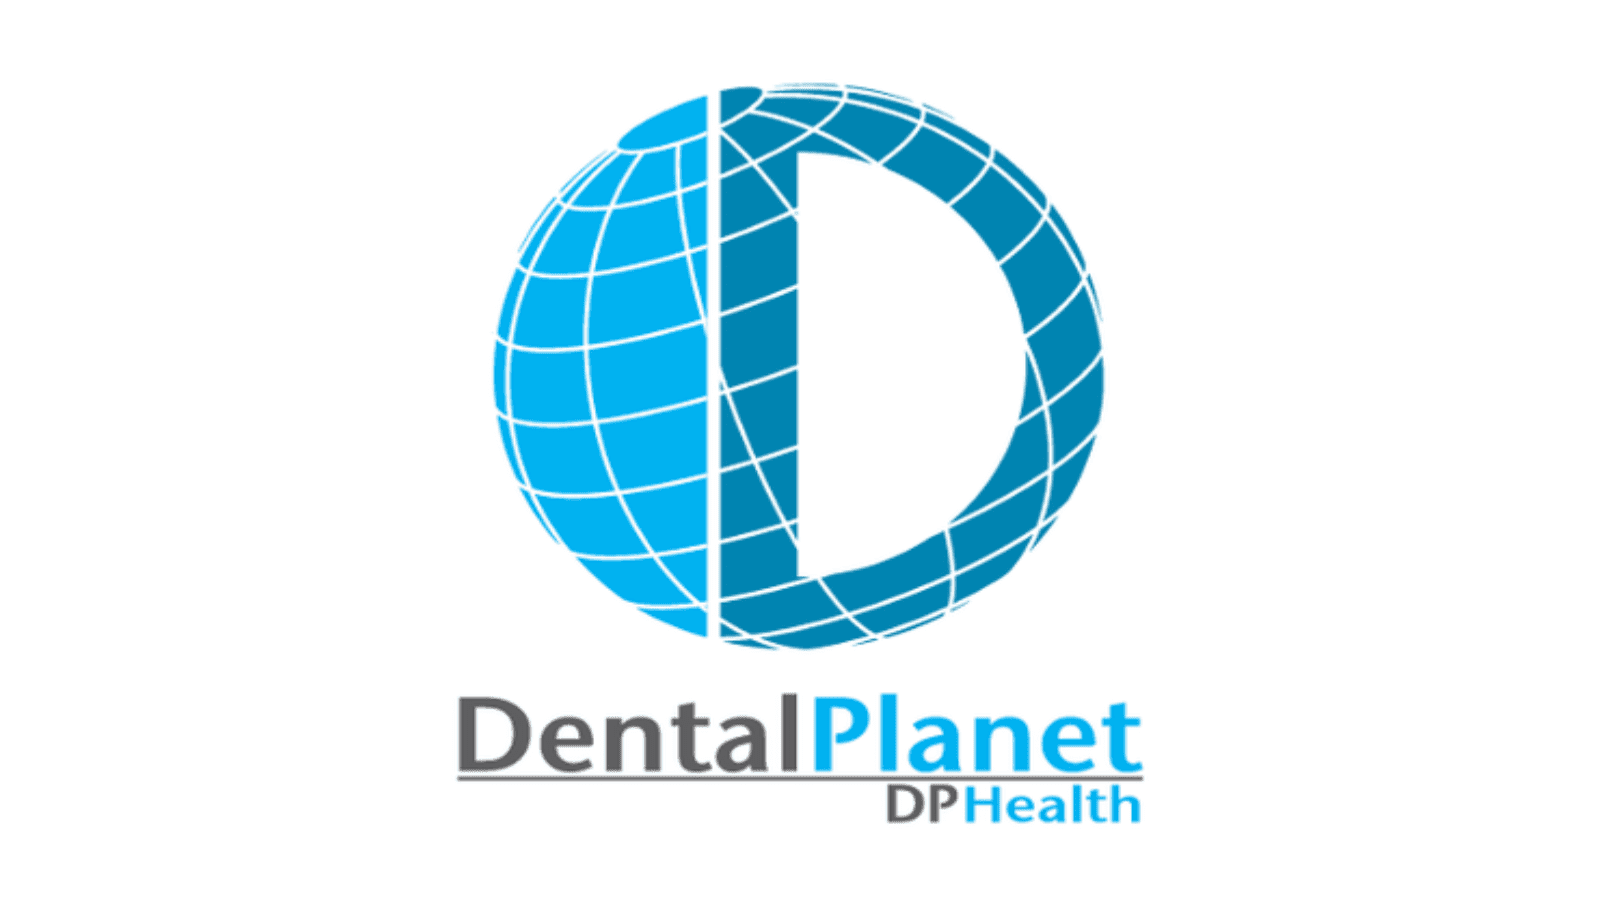 Dental planet logo 1